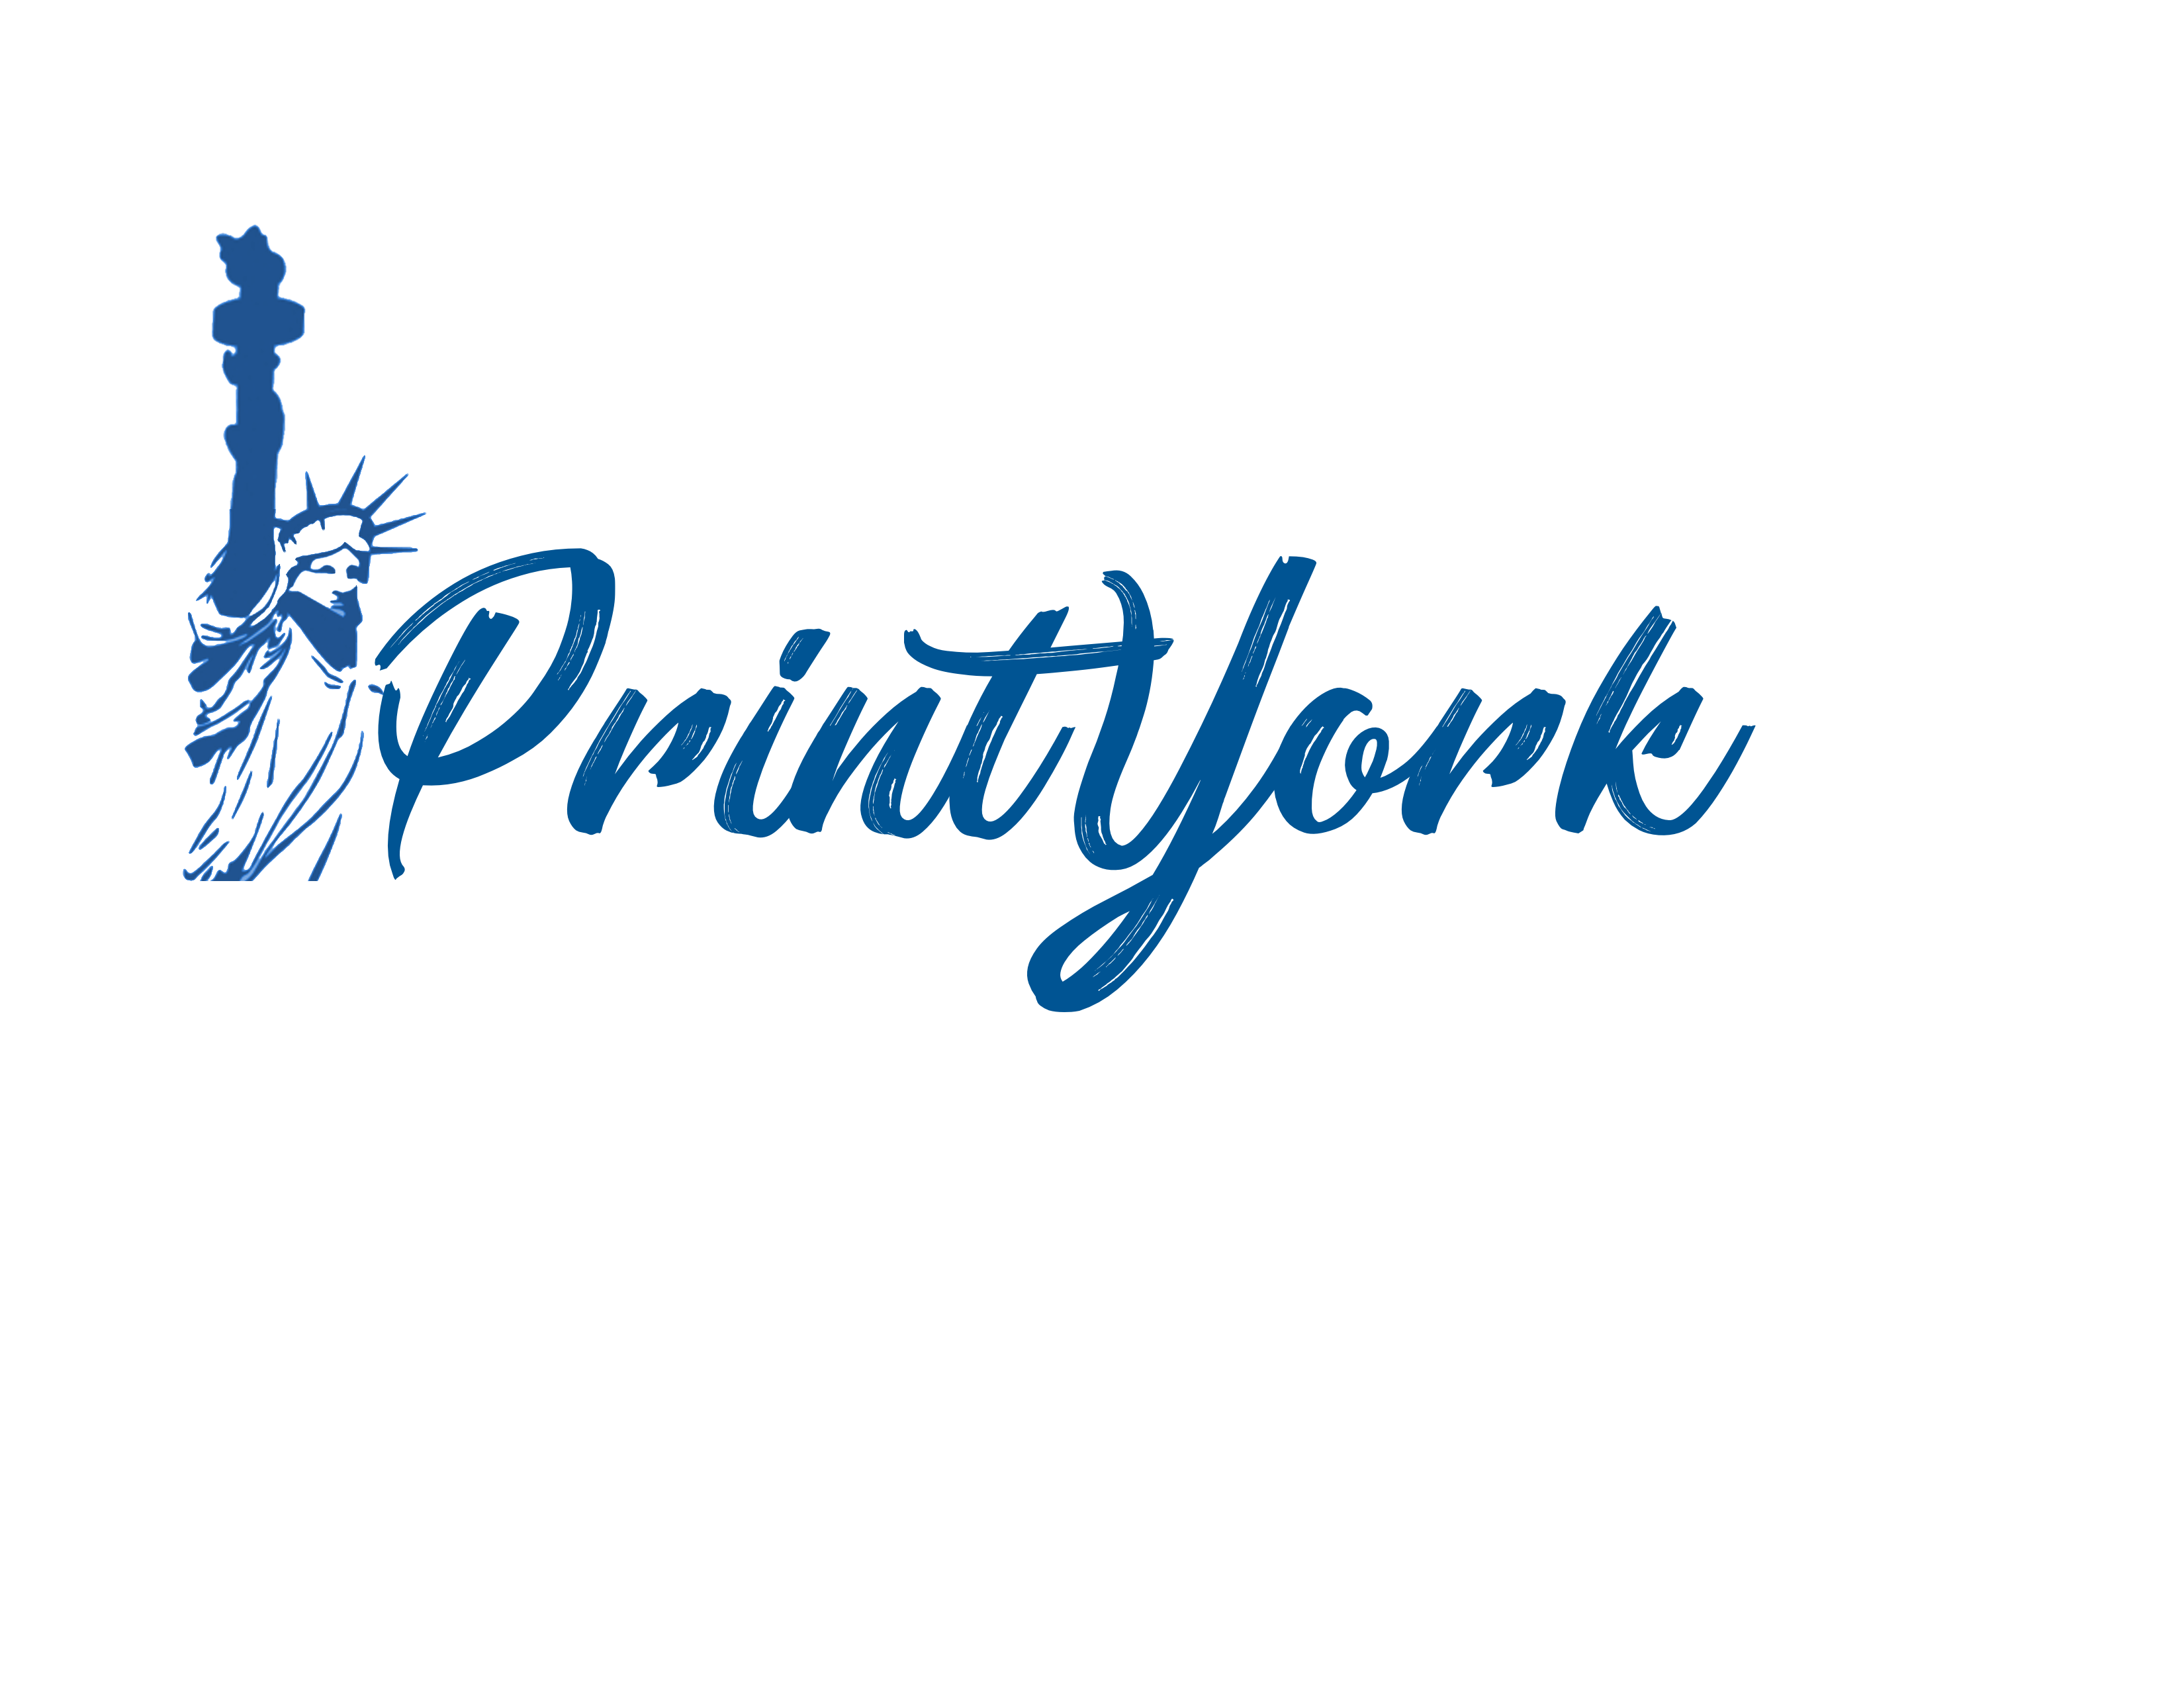 PrintYork Logo